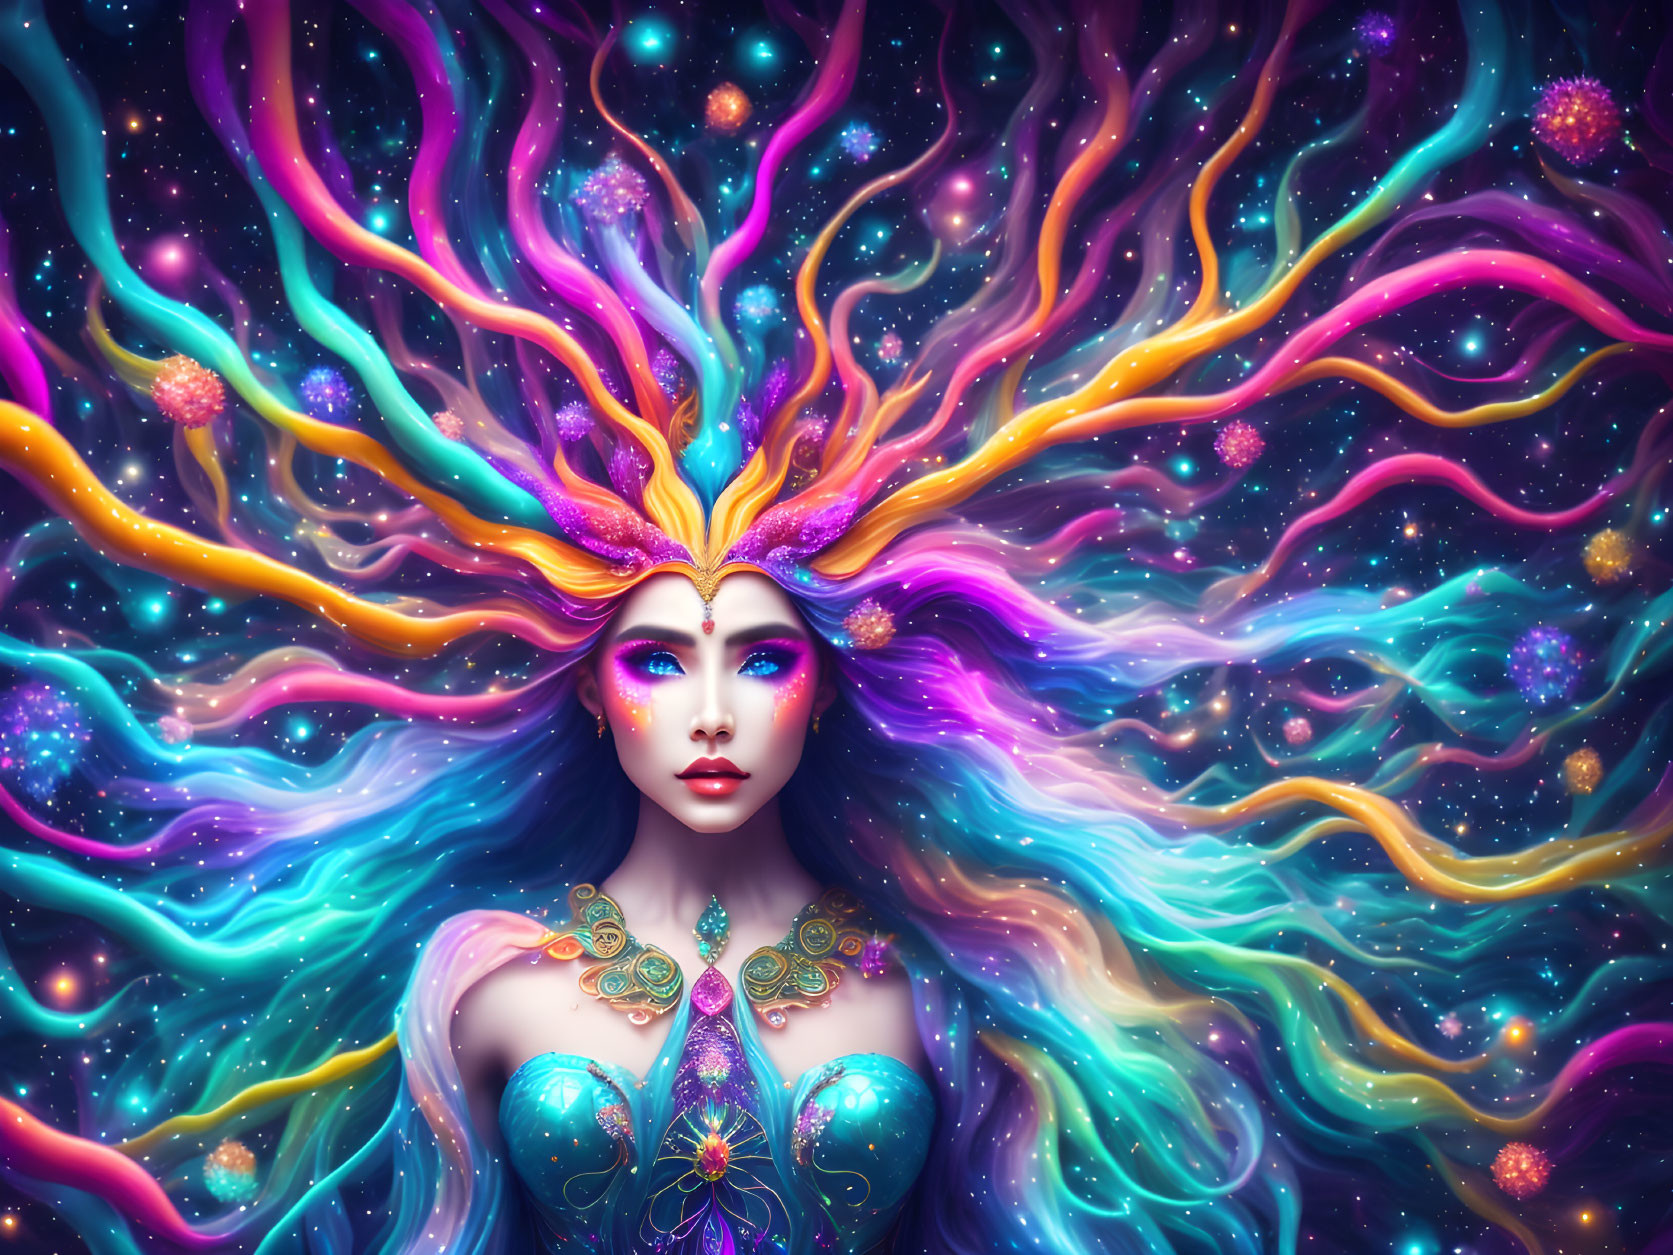 Ethereal beauty spirit soul fantasy woman